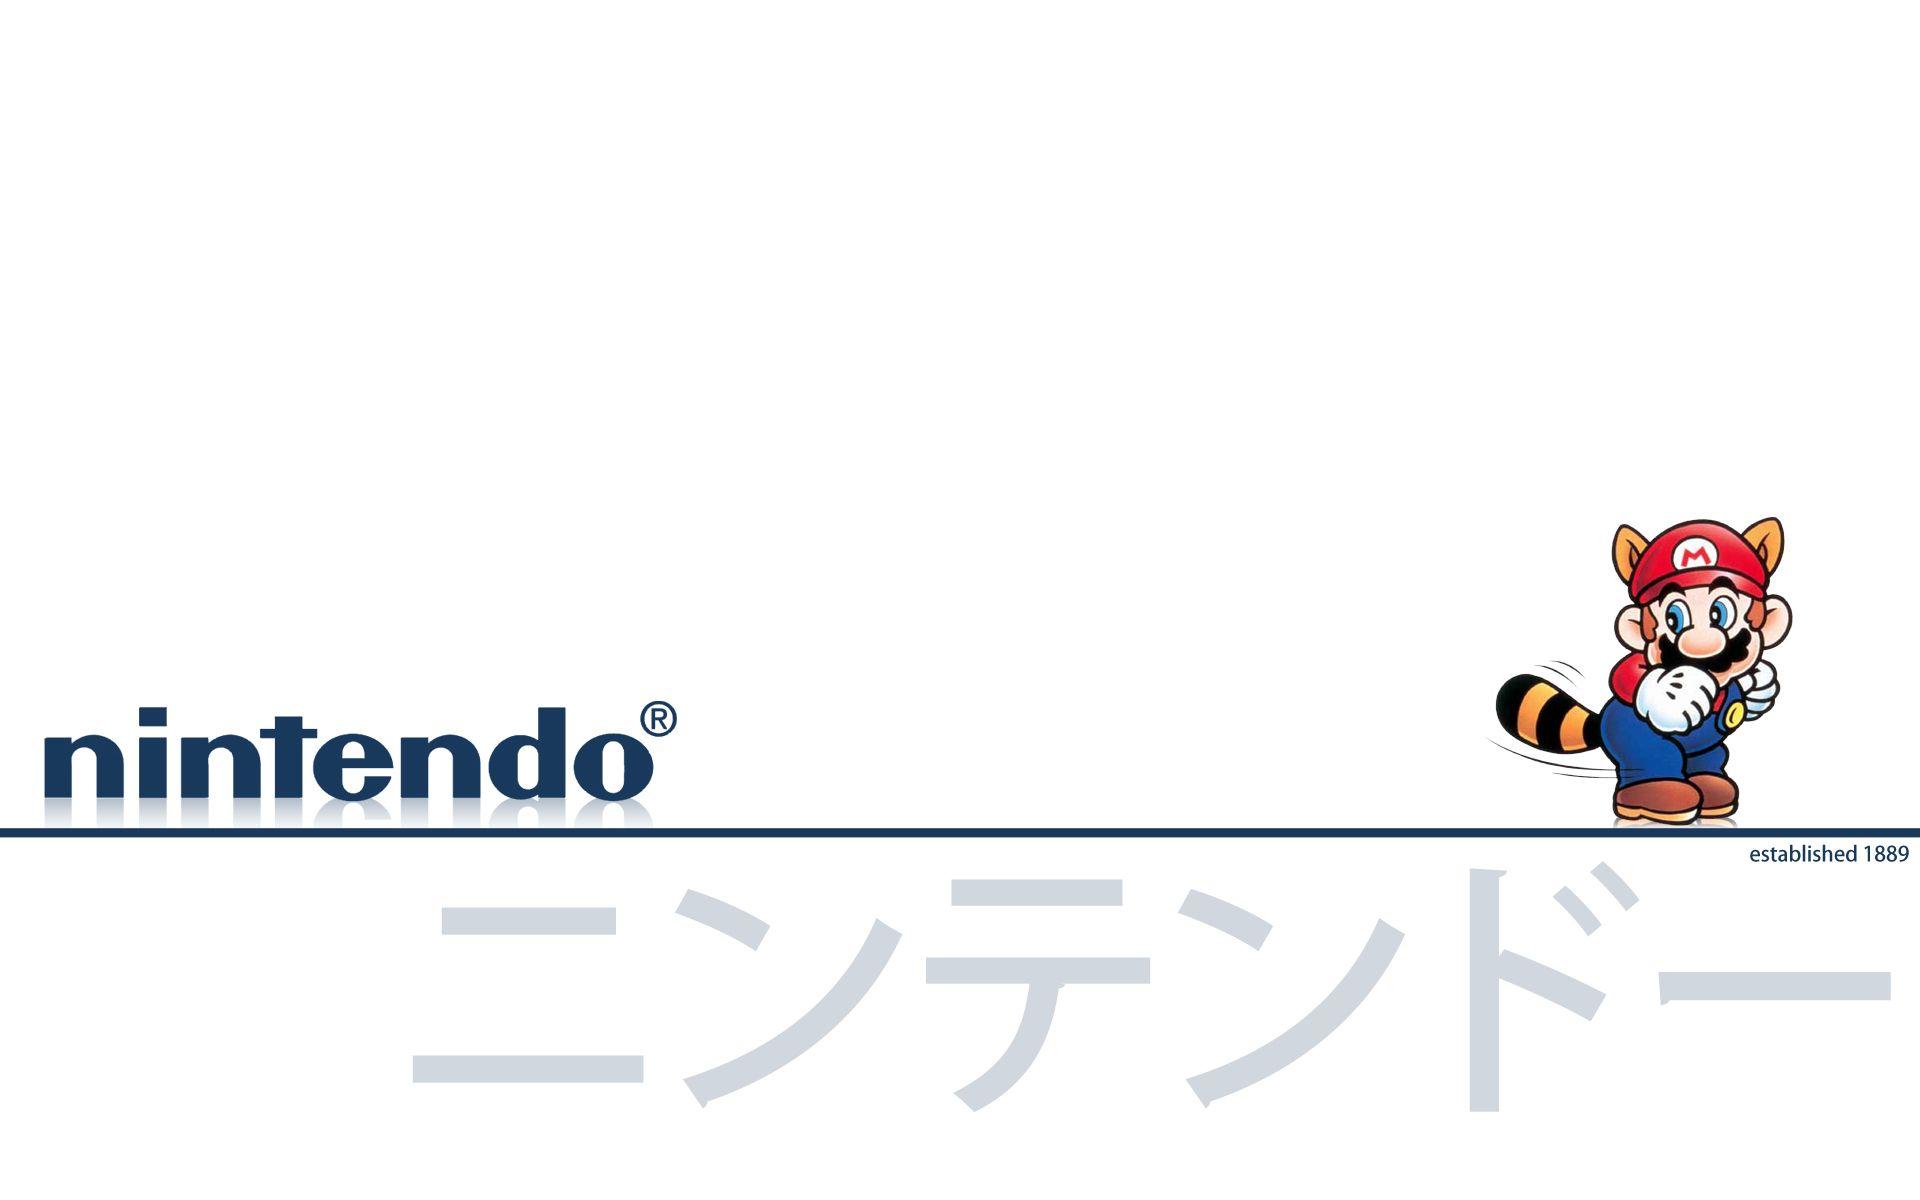 Download the Japanese Nintendo Wallpaper, Japanese Nintendo iPhone